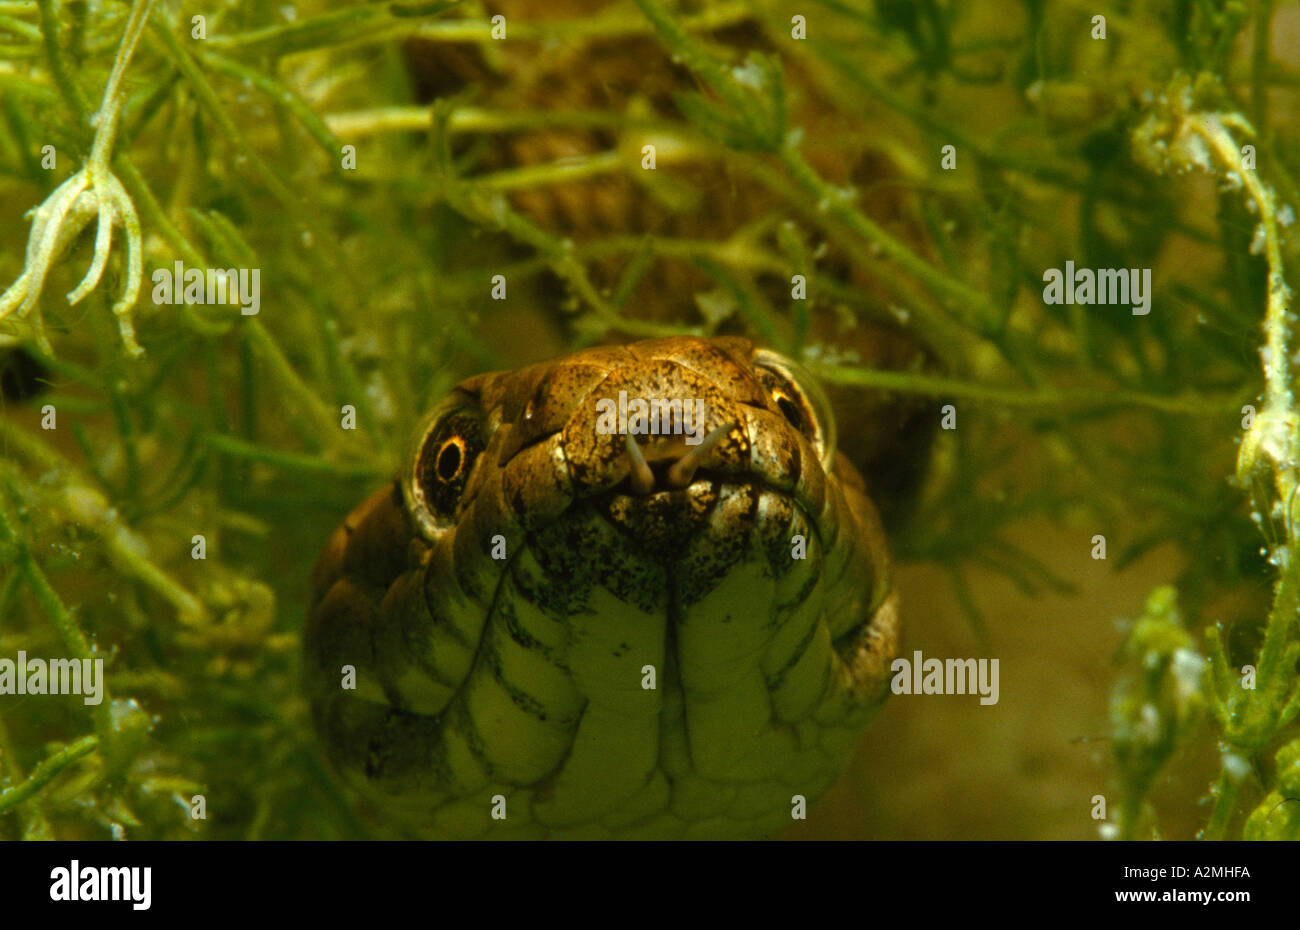 Dice Snake underwater, natrix tessellata Stock Photo